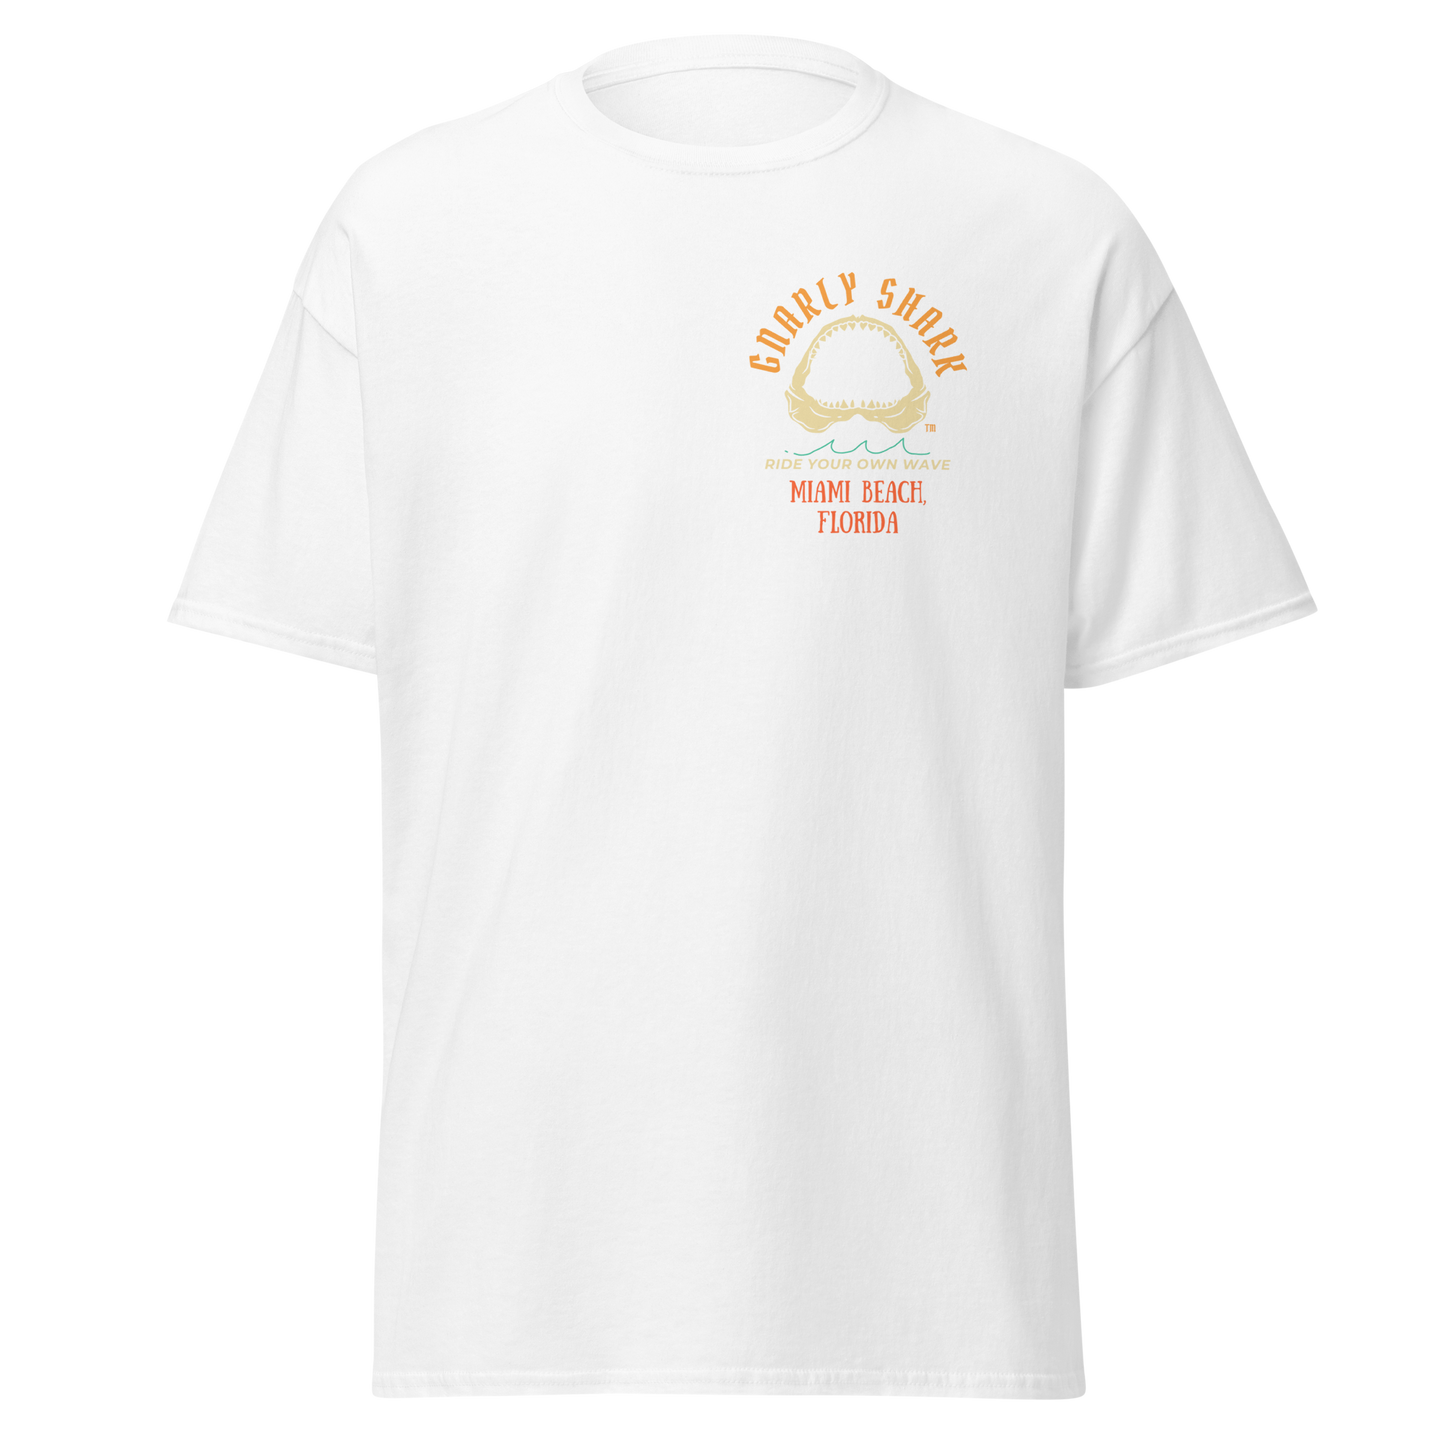 Gnarly Shark Miami Beach Florida T-Shirt - Front / Back - Gildan classic 5000